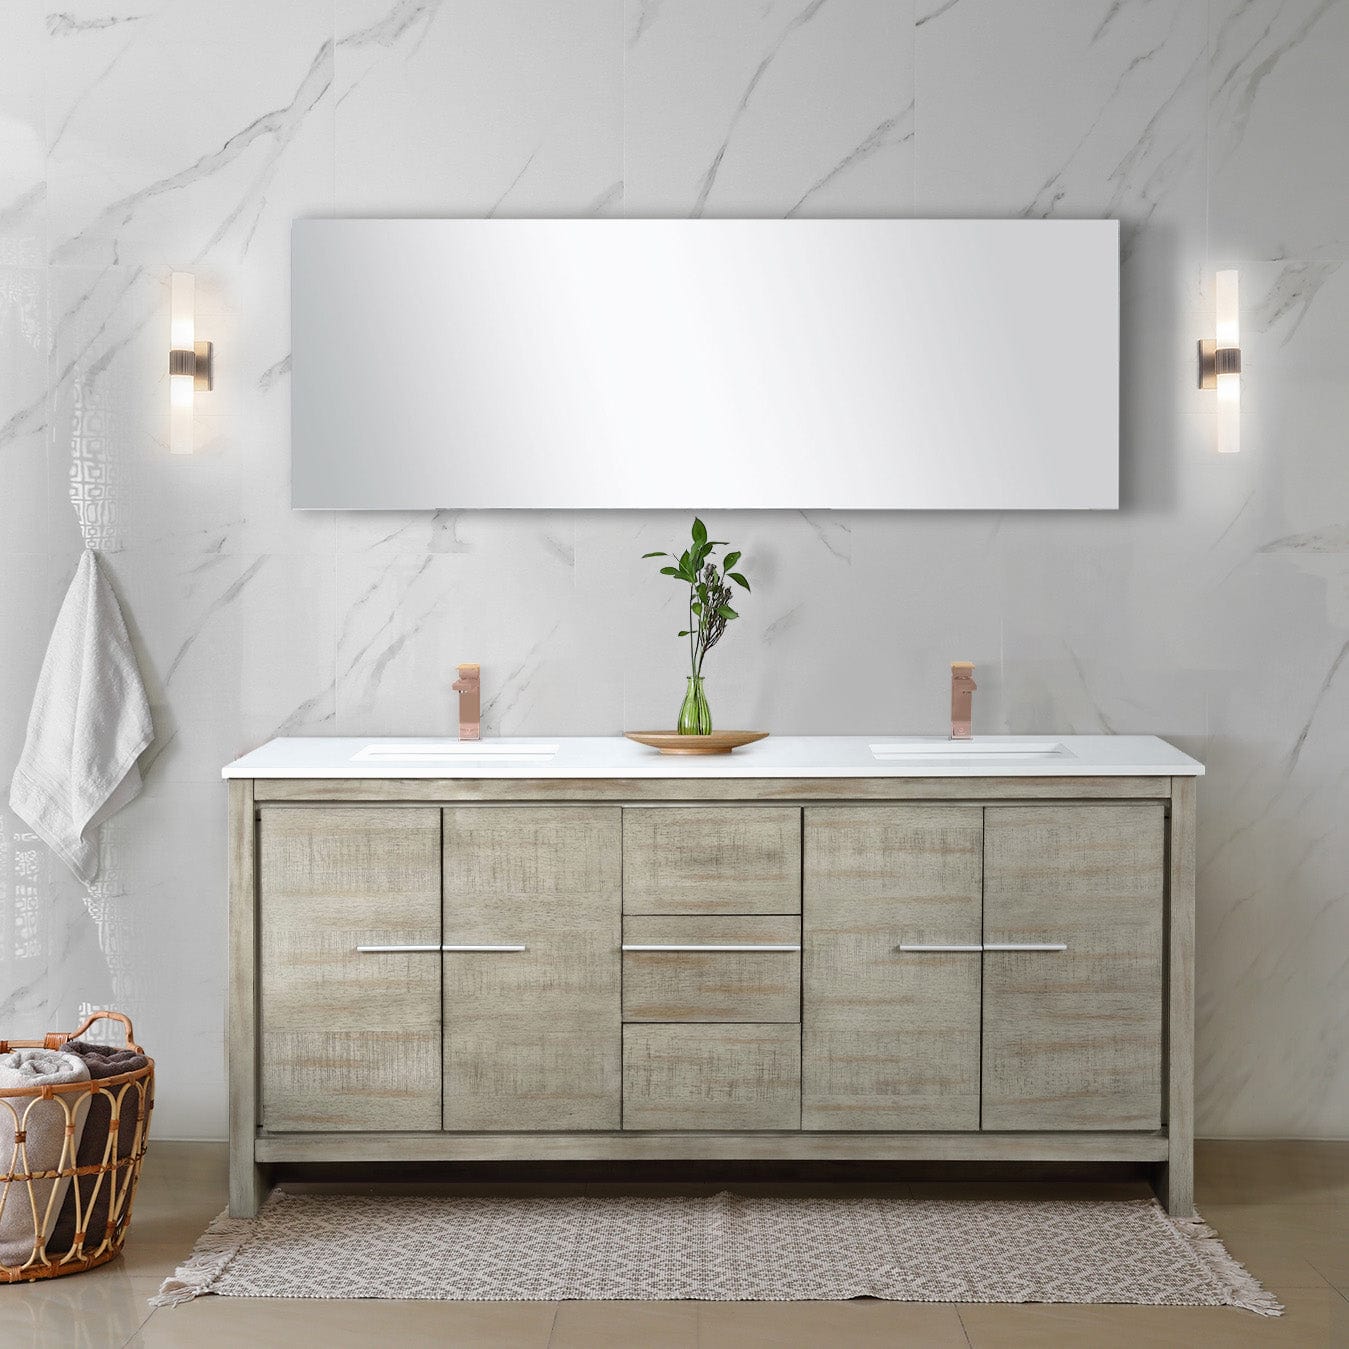 Lexora Bathroom Vanity Cultured Marble / Rose Gold Faucet / No Mirror Lafarre 72" Rustic Acacia Double Bathroom Vanity